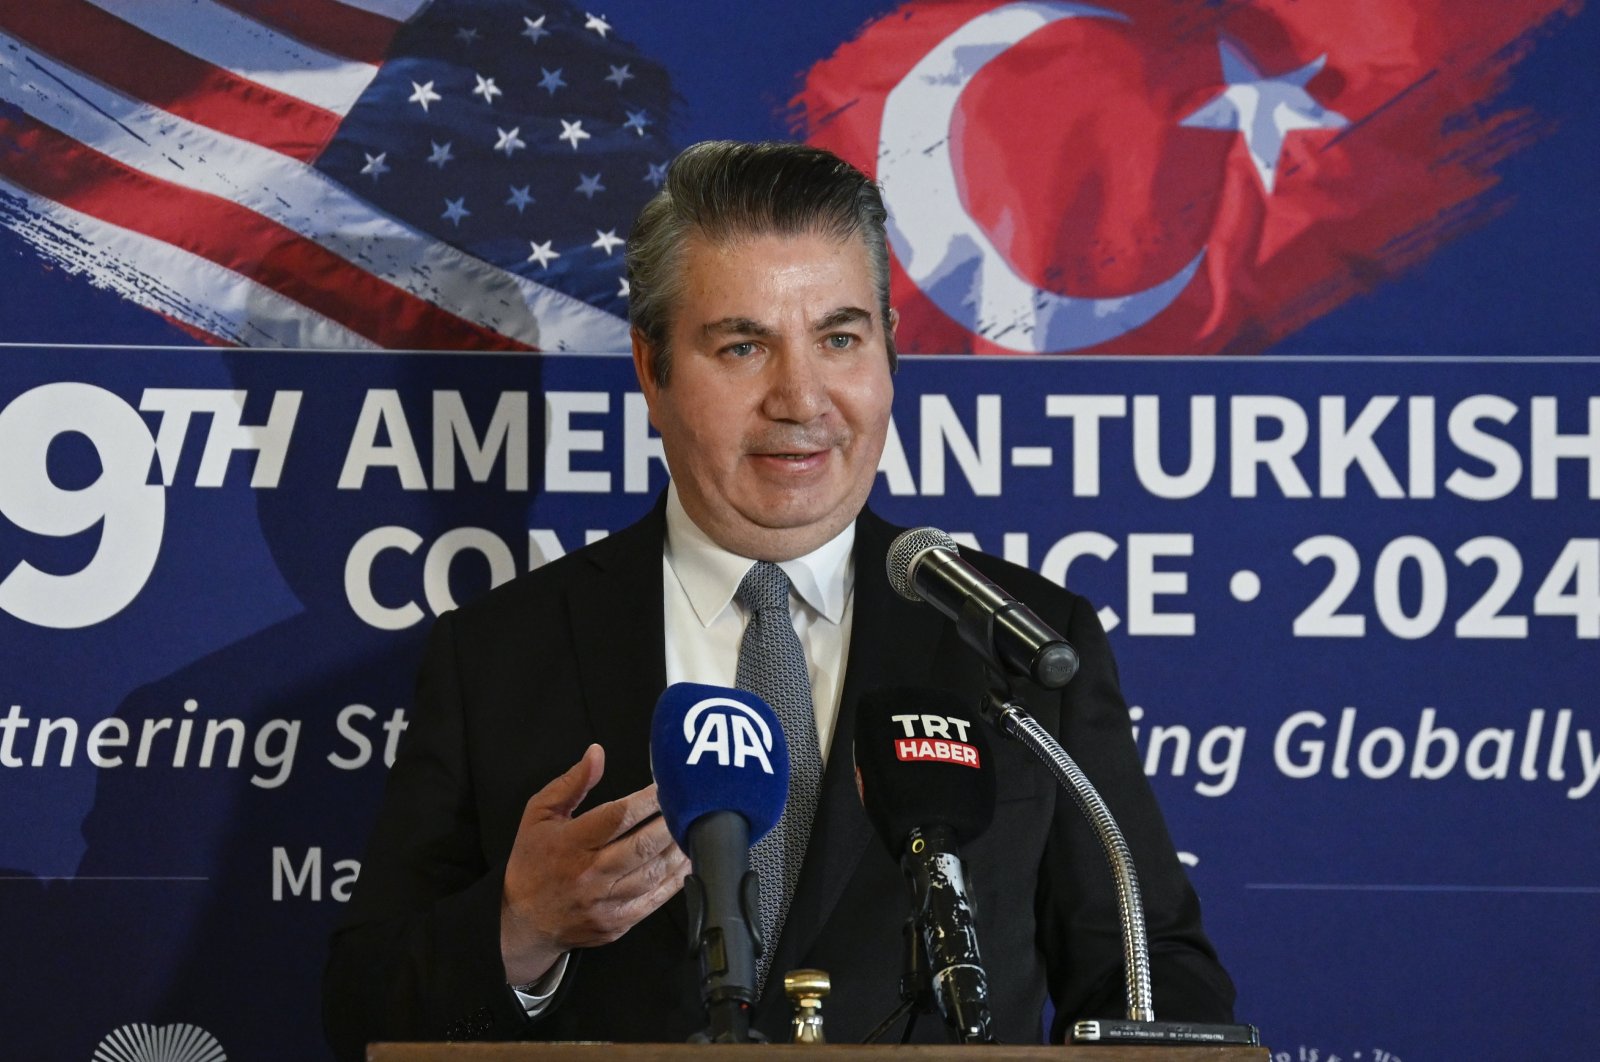 Türkiye’s ambassador to Washington Sedat Önal speaks at the 39th American-Turkish Conference, Washington, U.S., May 9, 2024. (AA Photo)